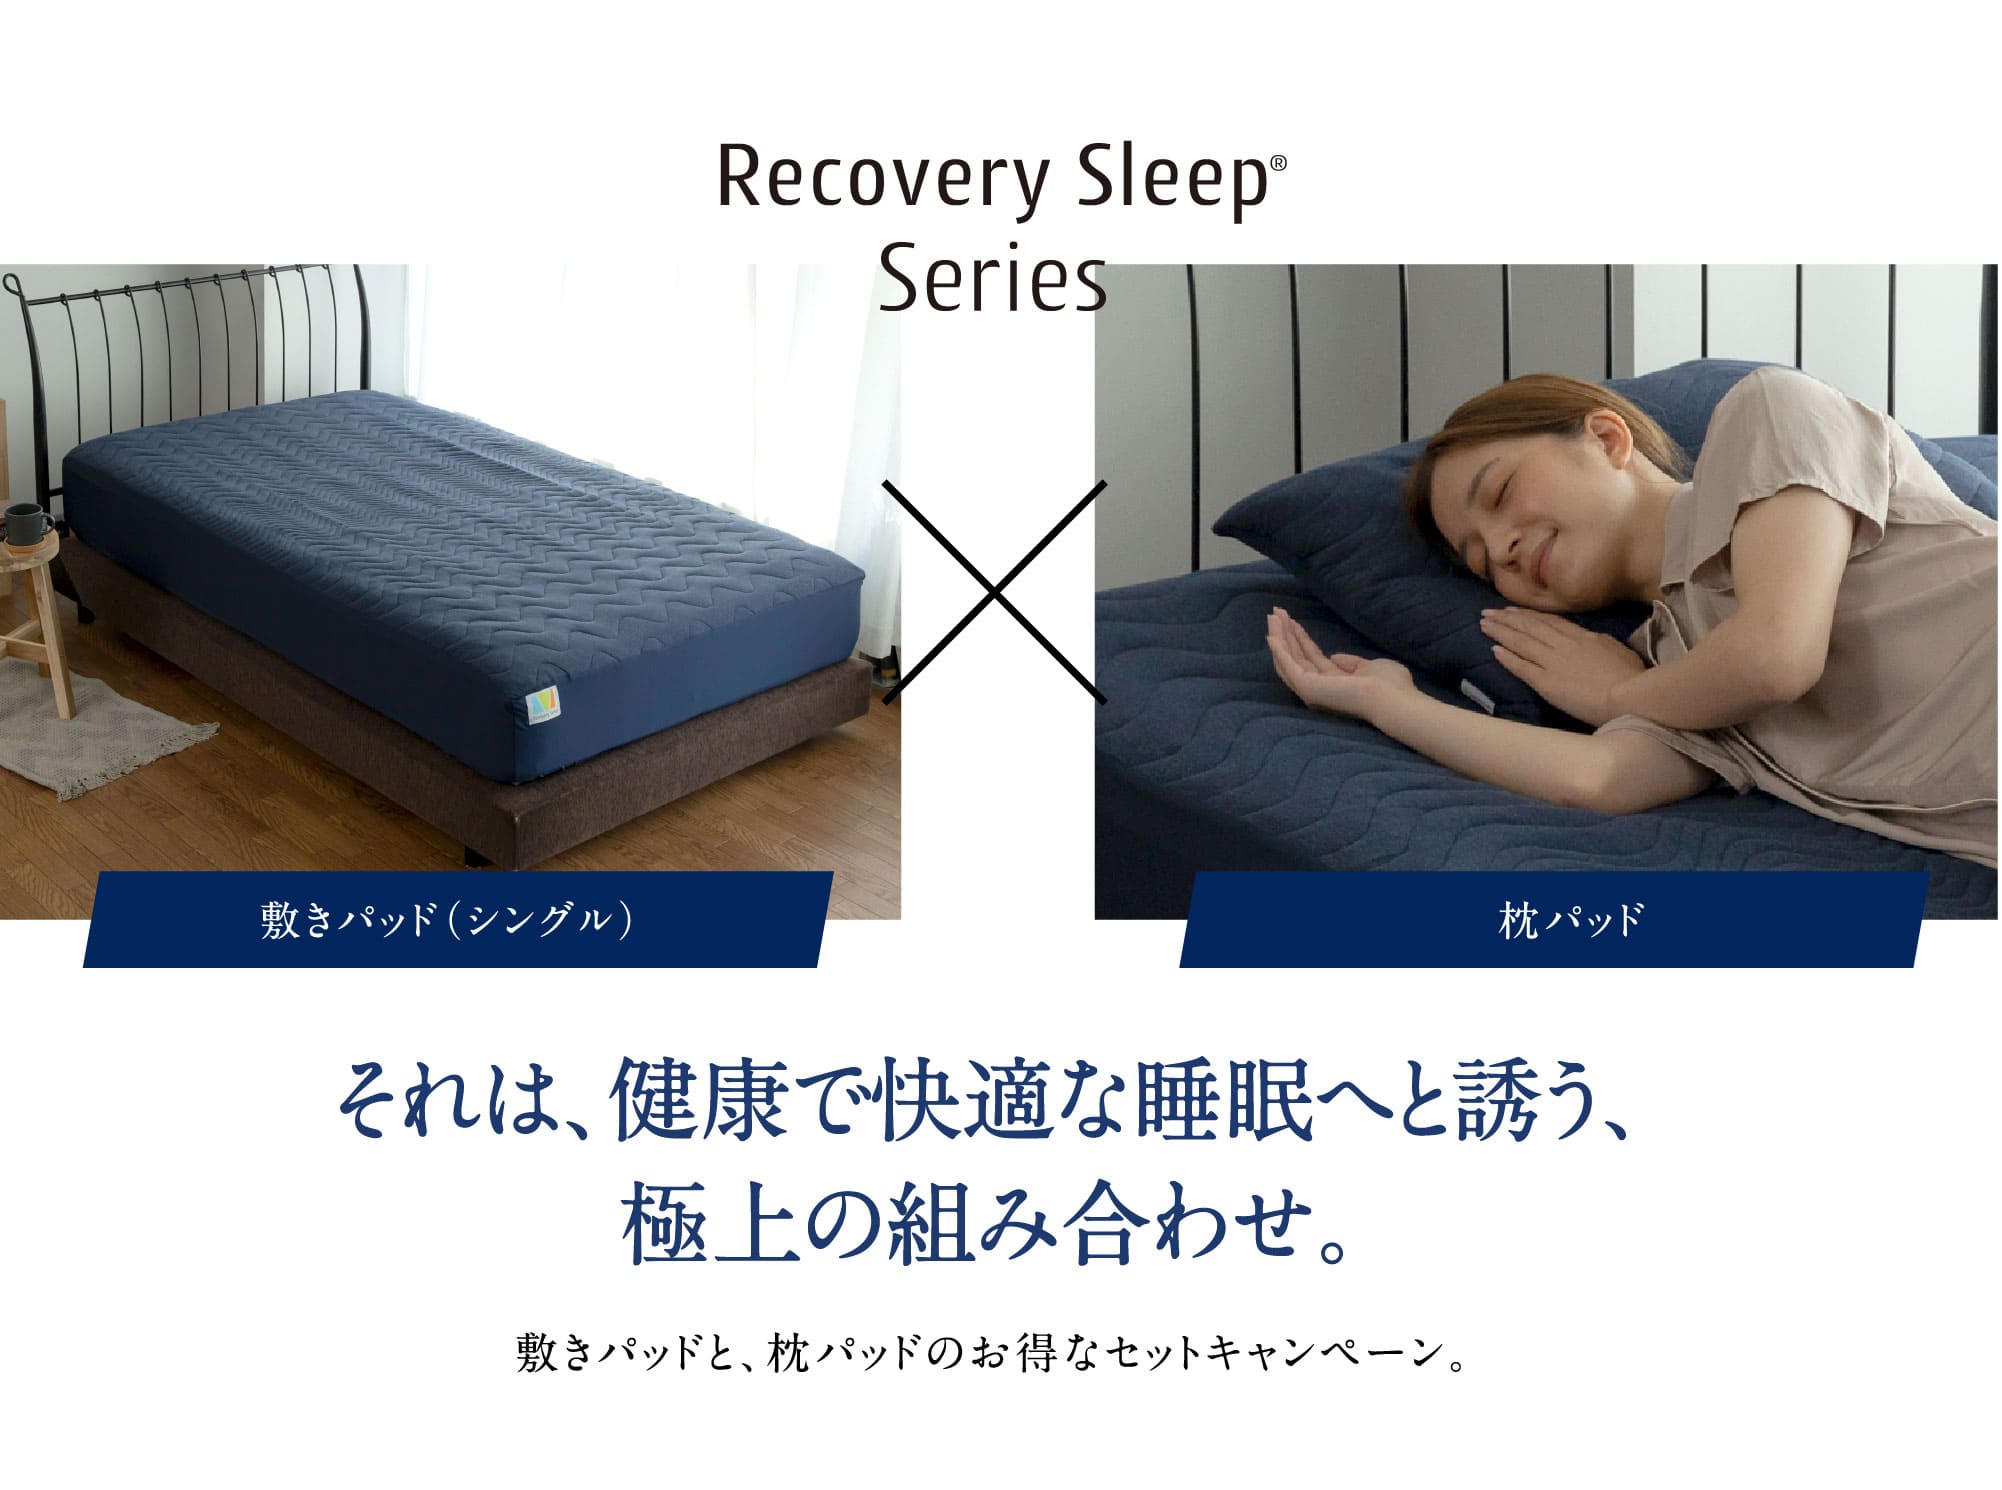 Recovery Sleep Series 敷きパッド（シングル）枕パッドそれは、健康で快適な睡眠へと誘う極上の組み合わせ。一般医療機器敷きパッドと、枕パッドのお得なセットキャンペーン。